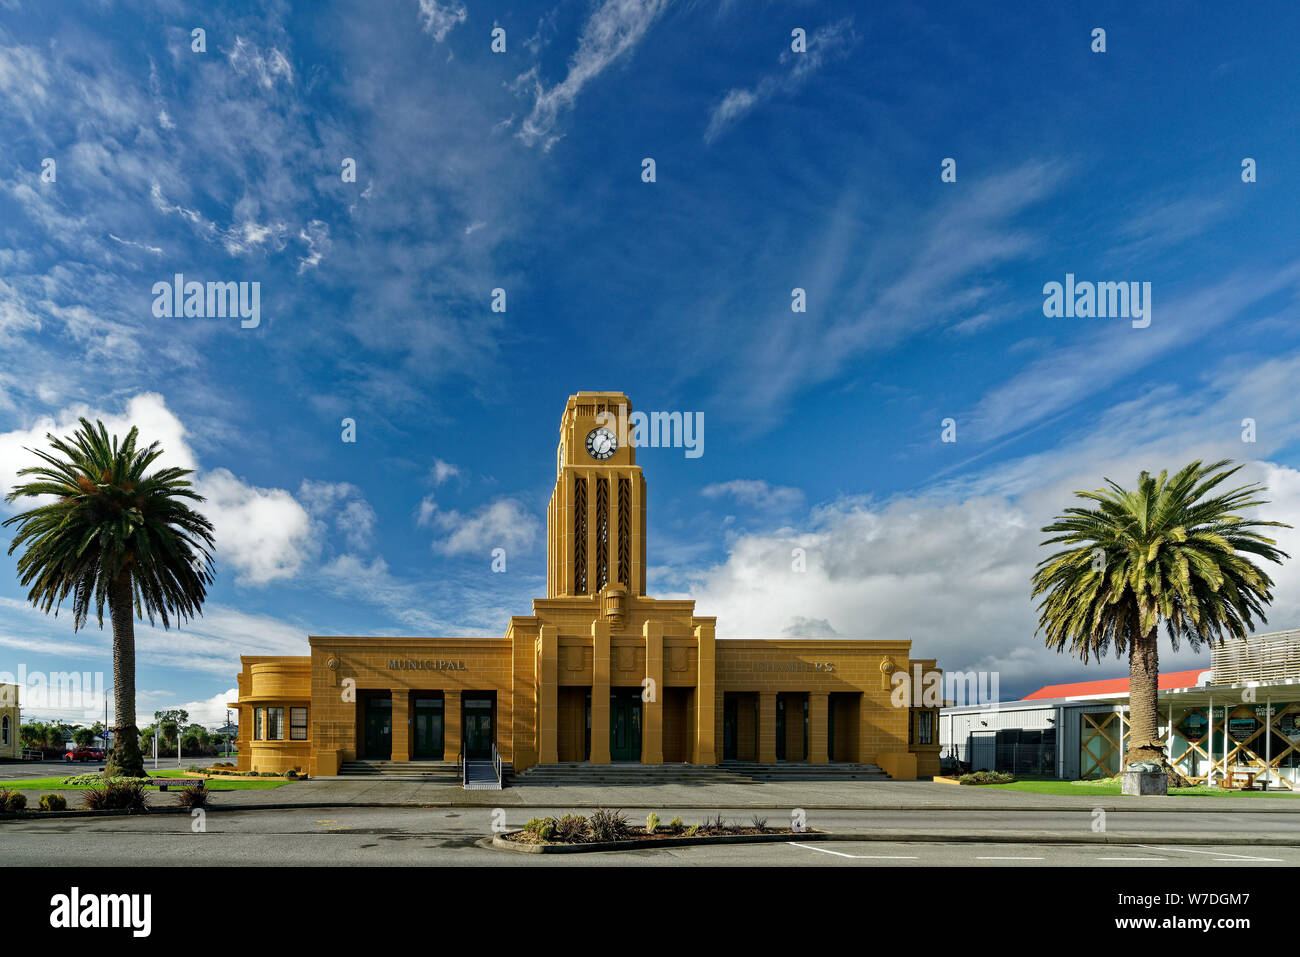 Westport, West Coast/Neuseeland - Juli 20, 2019: Westport Municipal Chambers, Palmerston Street, Rotorua, Neuseeland. Stockfoto